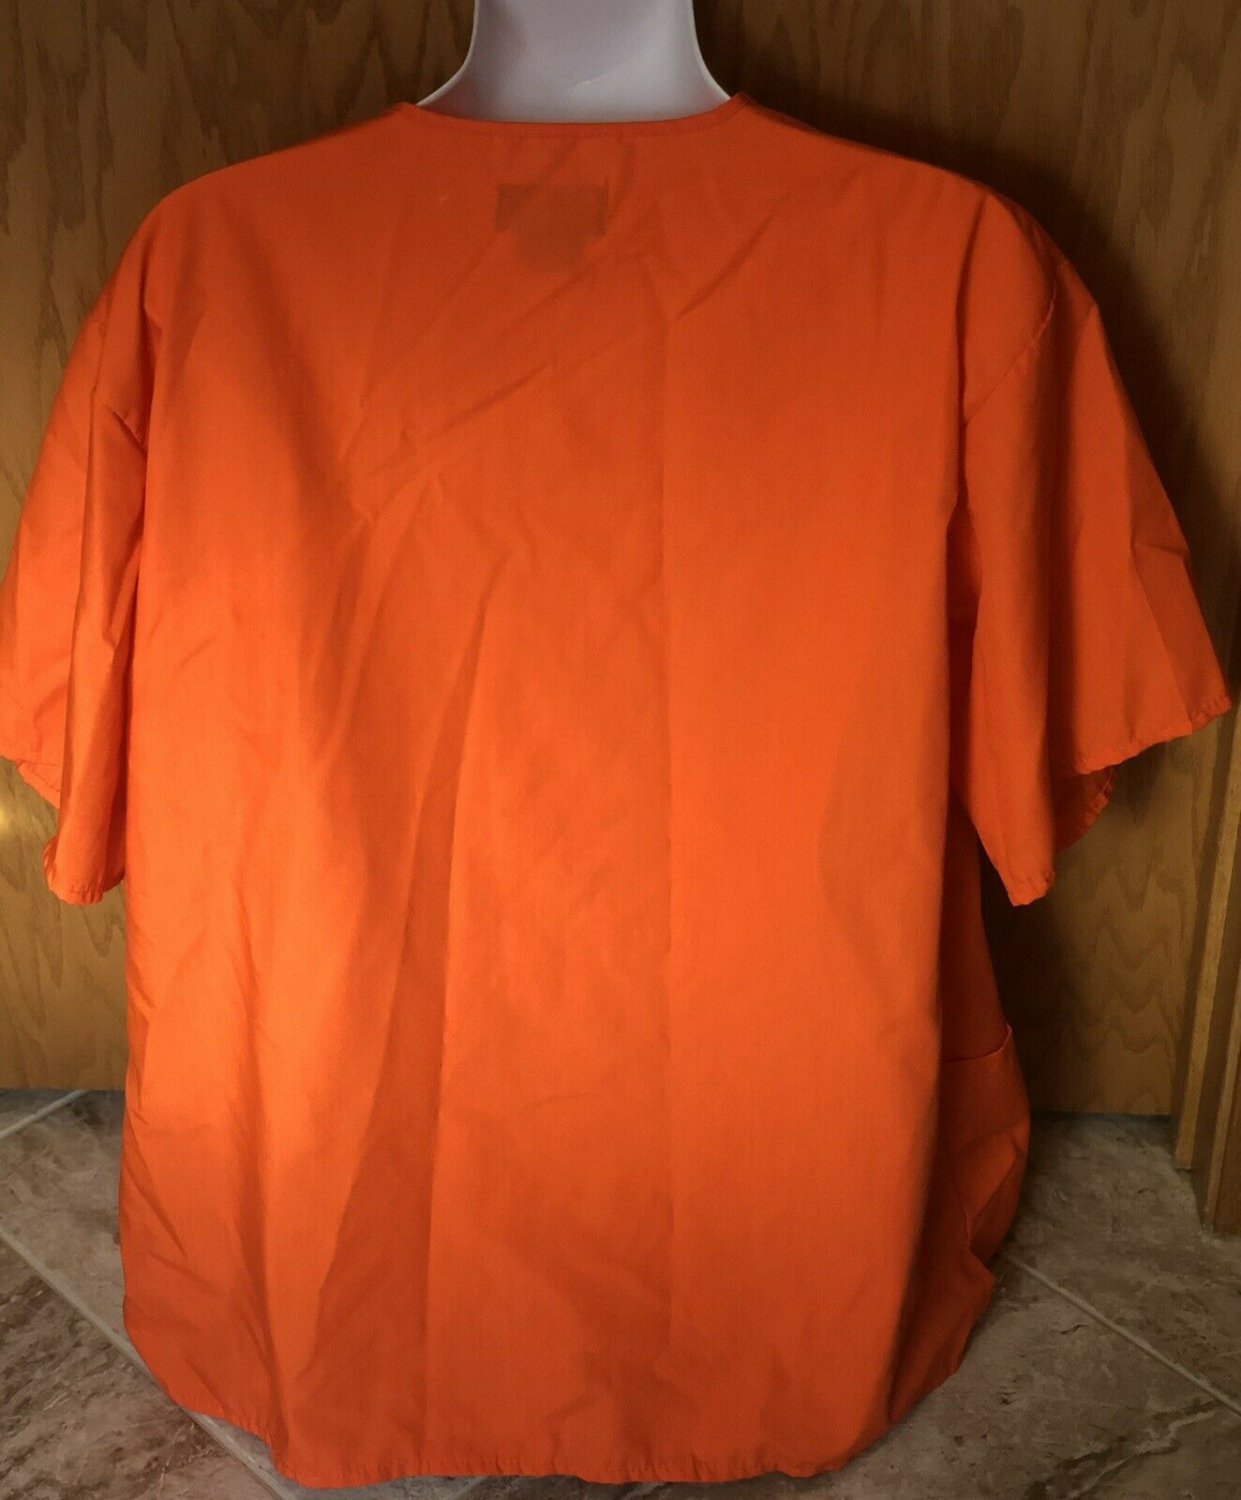 Natural Uniforms Bright Orange Medical Worker Scrub Top Size Medium